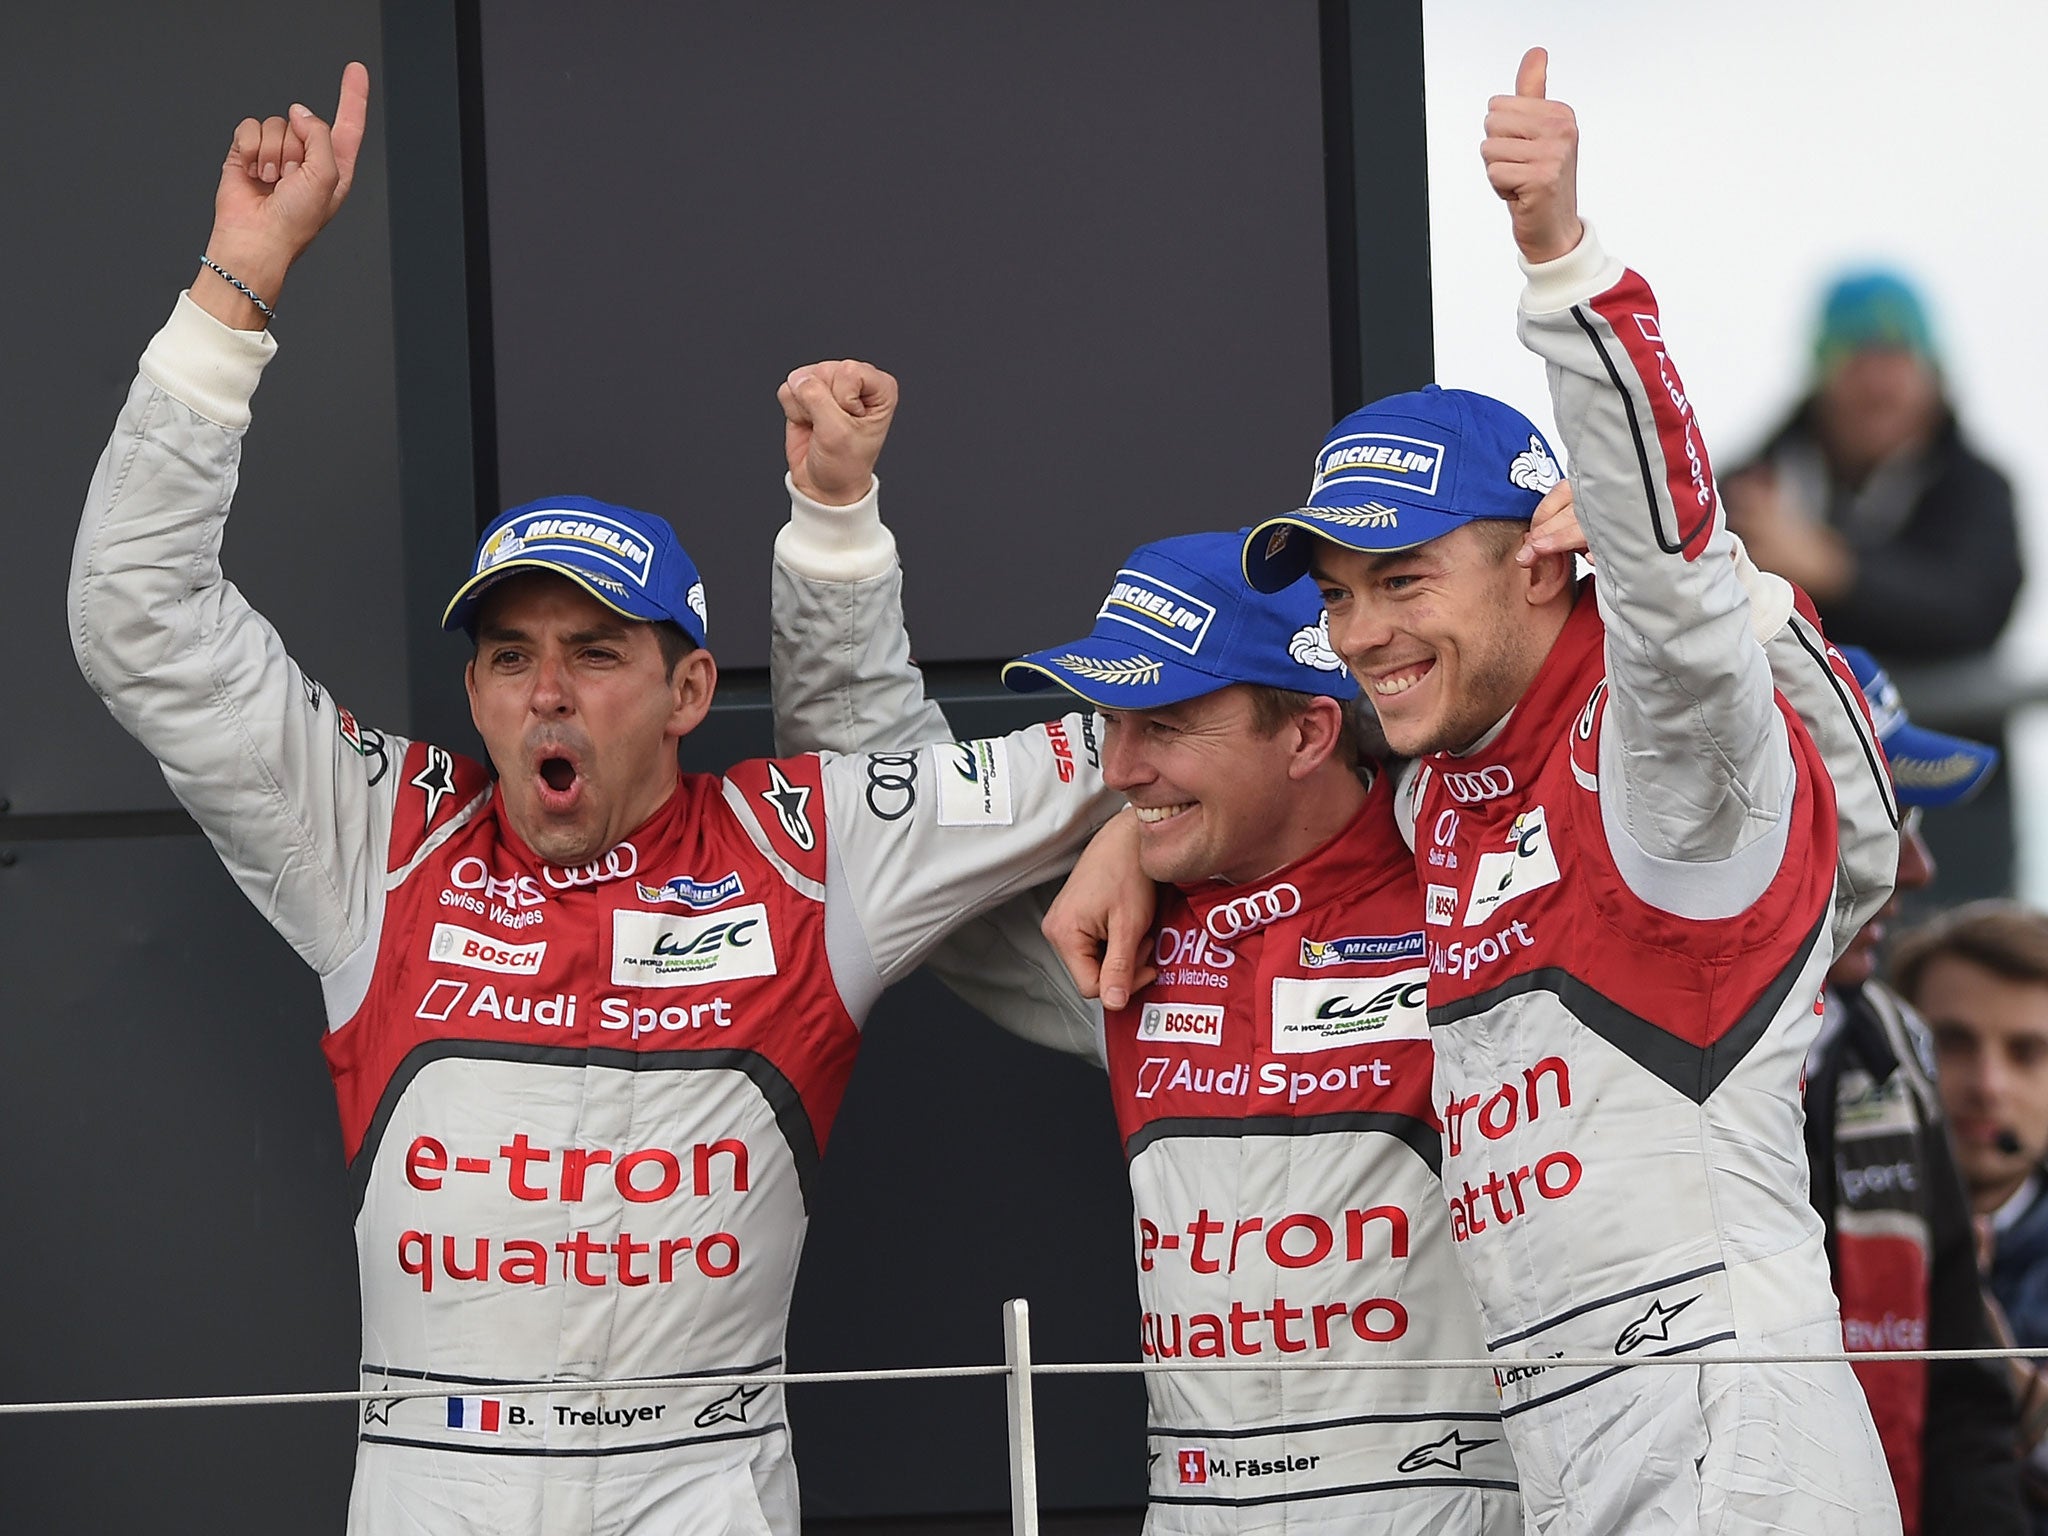 Benoit Treluyer, Marcel Fassler and Andre Lotterer celebrate victory